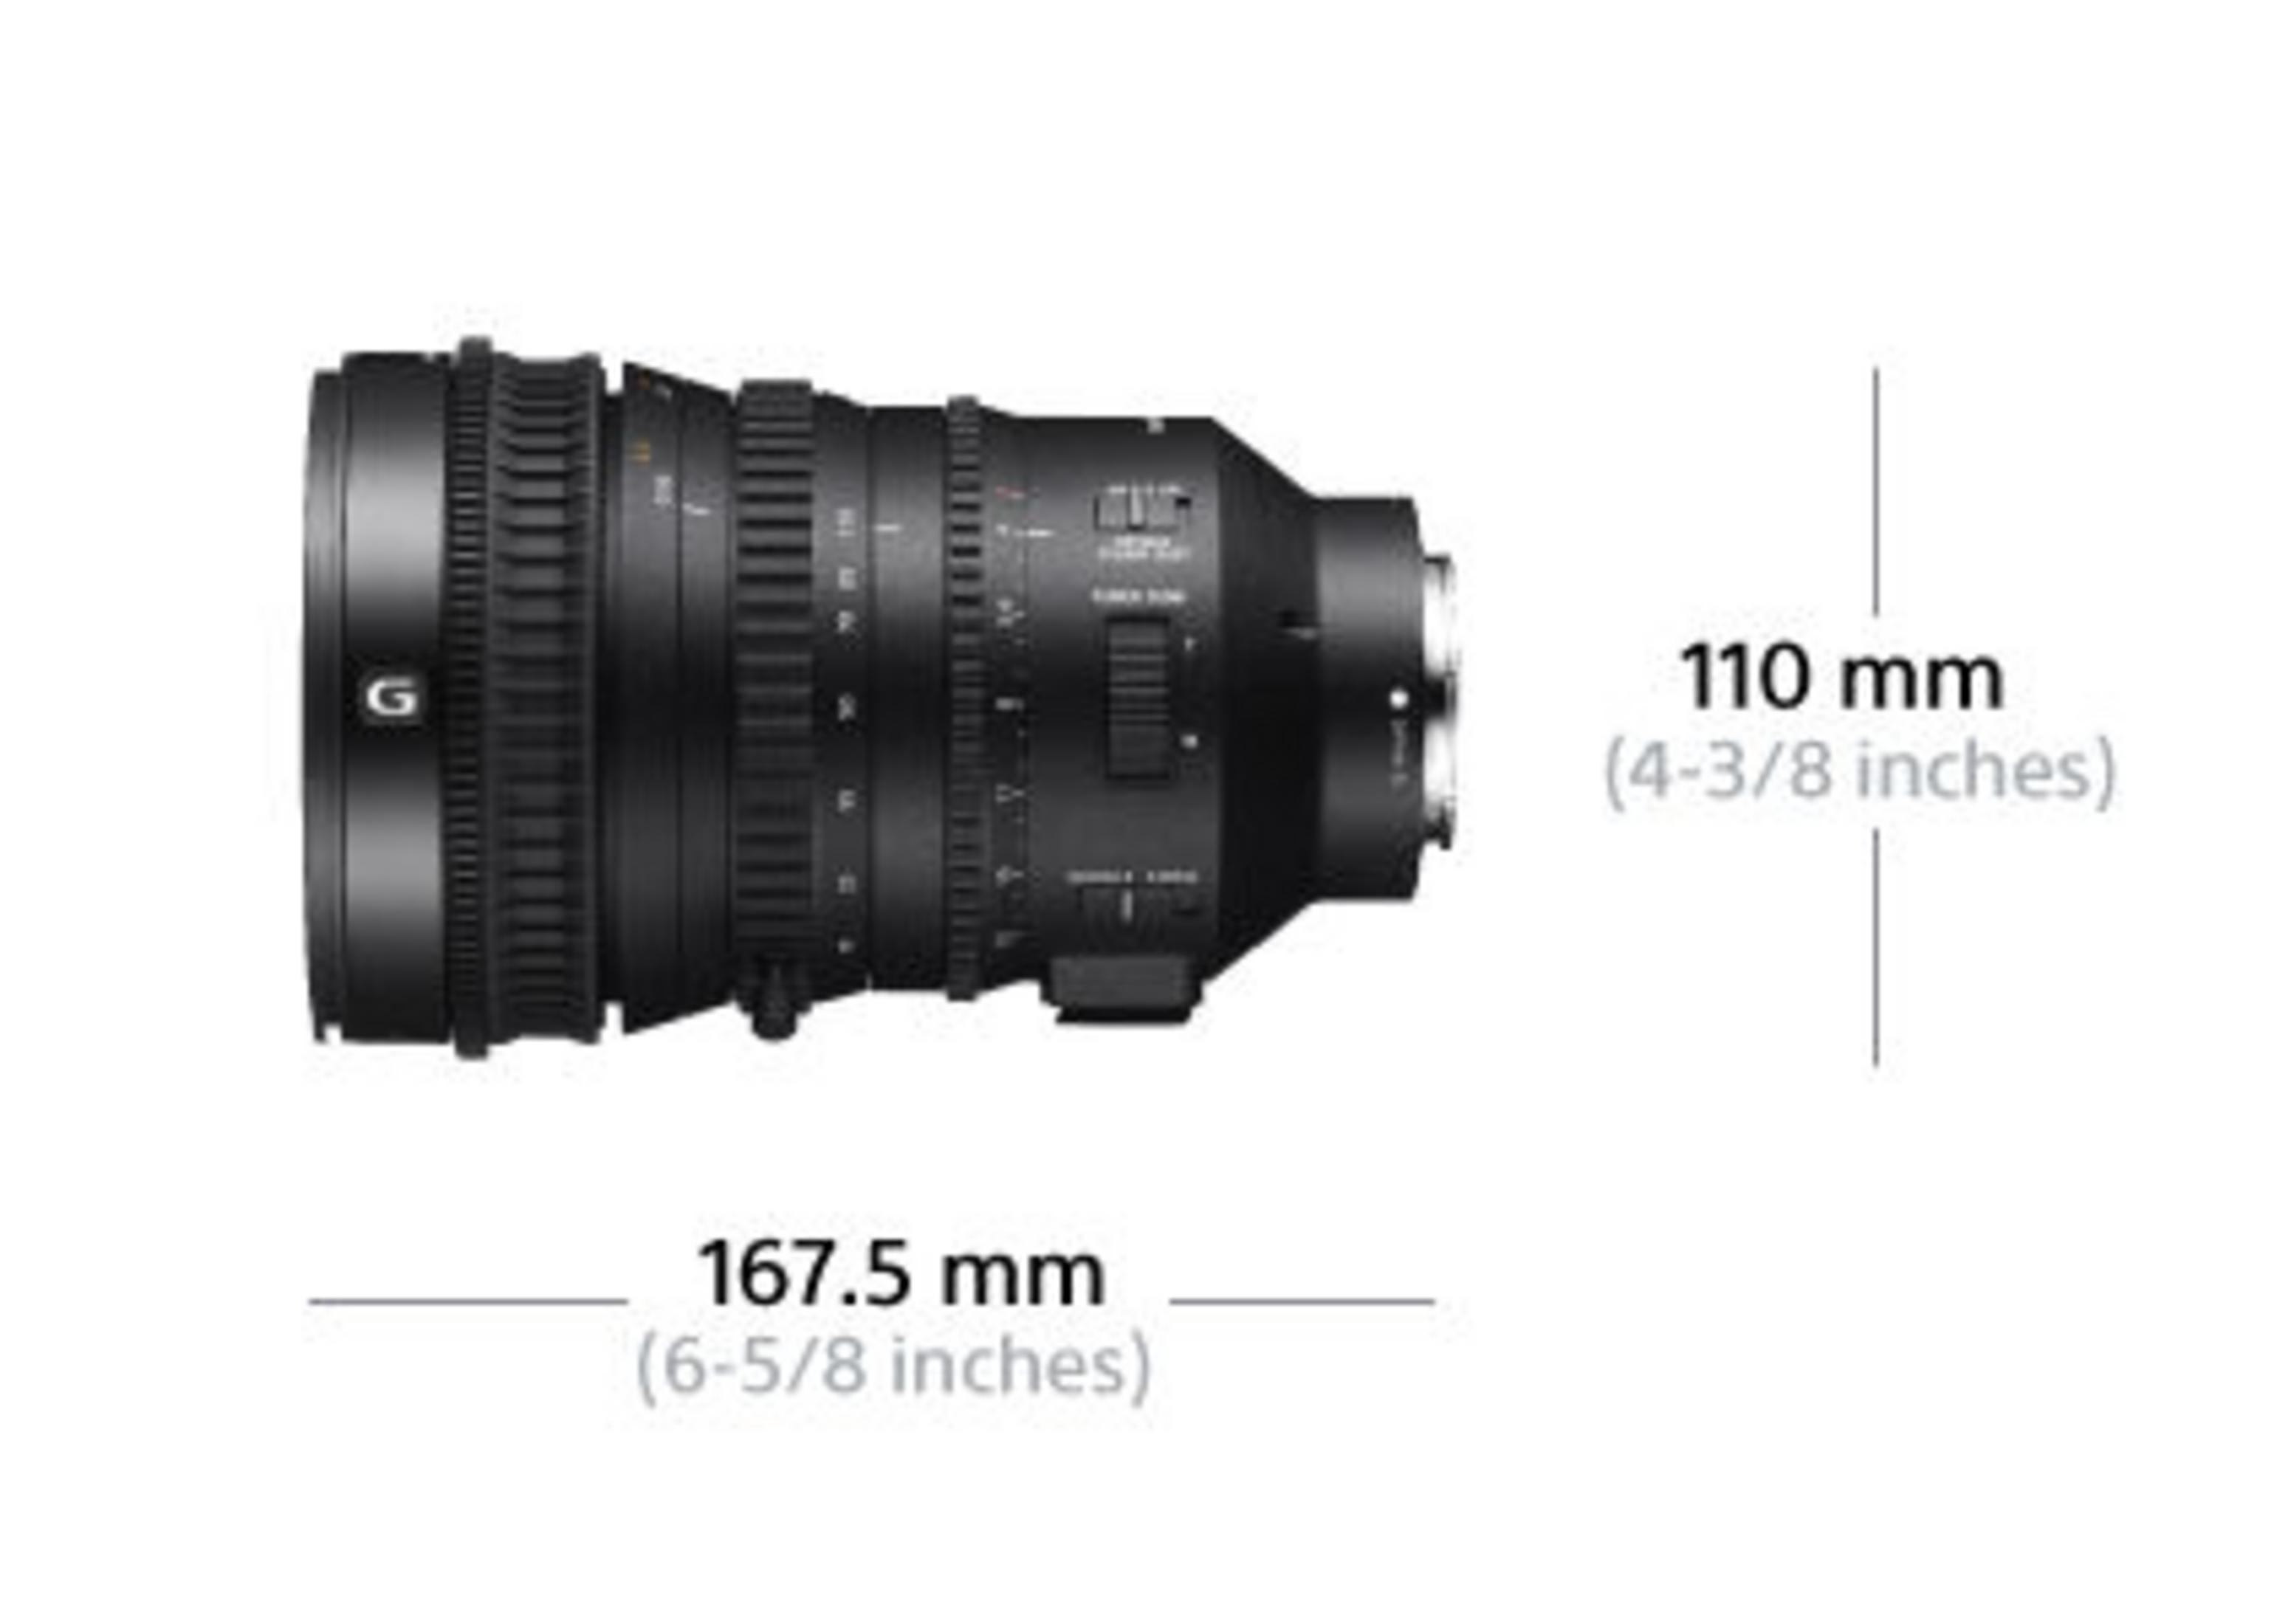 für G-Lens, G (Objektiv mm OSS, DMR (F4) Sony 18-110MM 18 POWERZOOM FE - Blende, SEL-P Schwarz) Circulare mm 110 E-Mount, G-OBJEKTI 18110 f/4.0 SONY